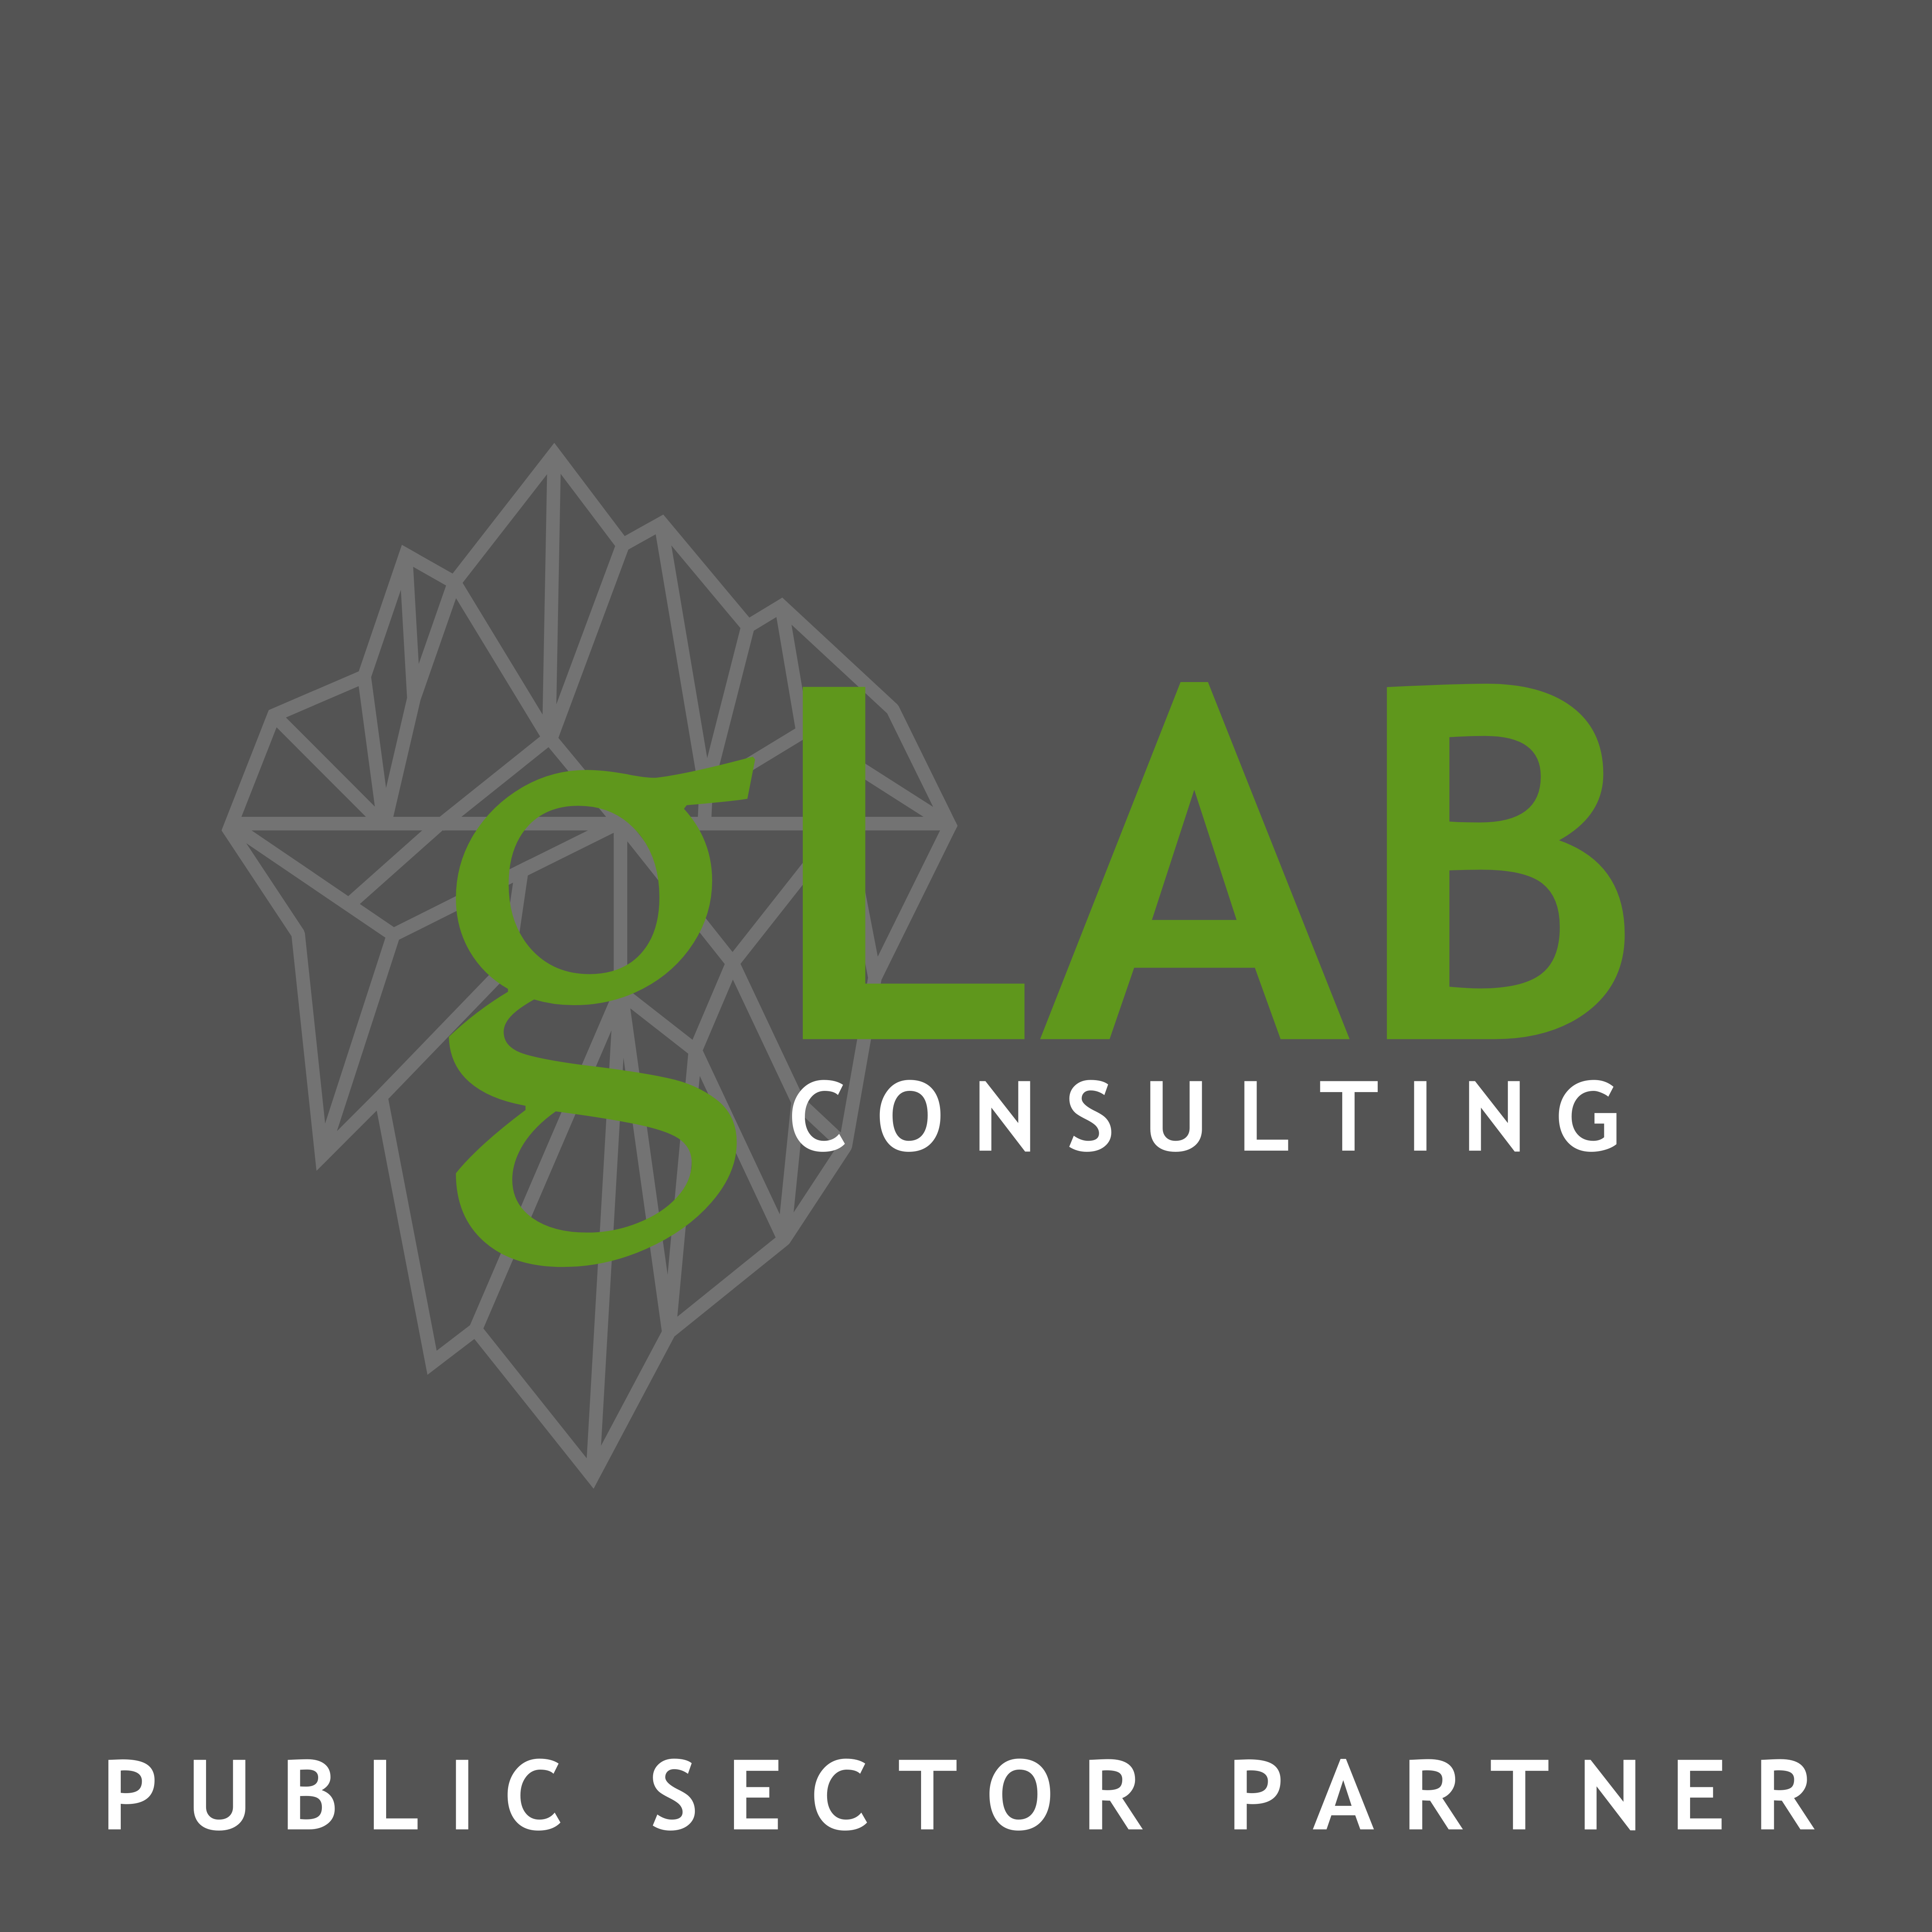 gLAB – Public Sector Partner